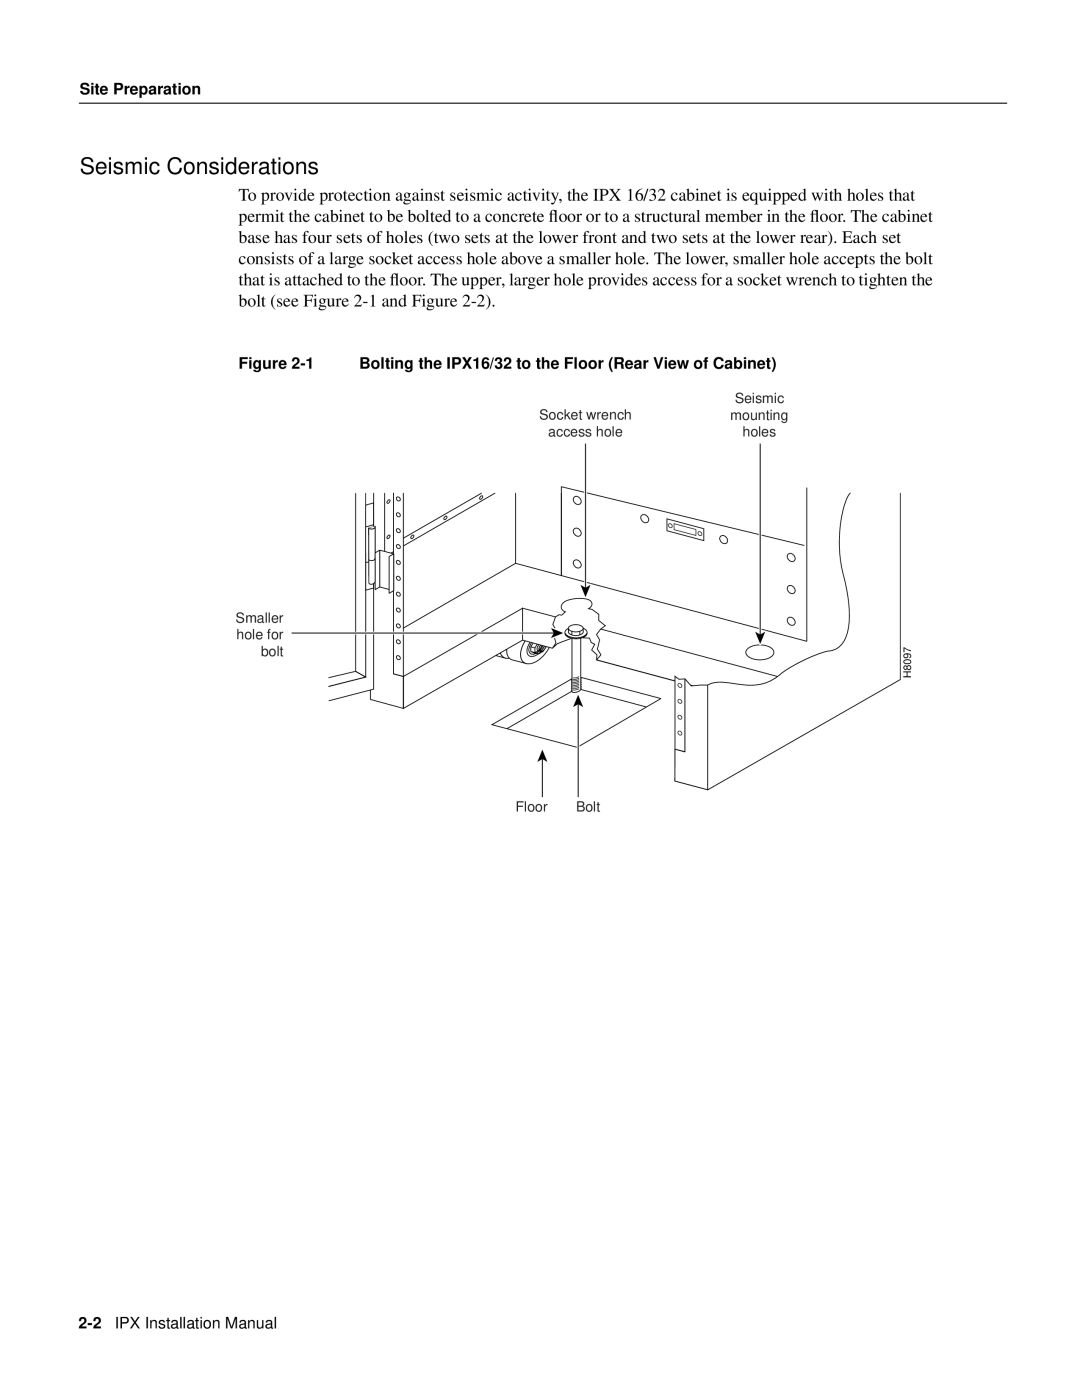 Cisco Systems BPX 8600 Series manual Seismic Considerations, Site Preparation 